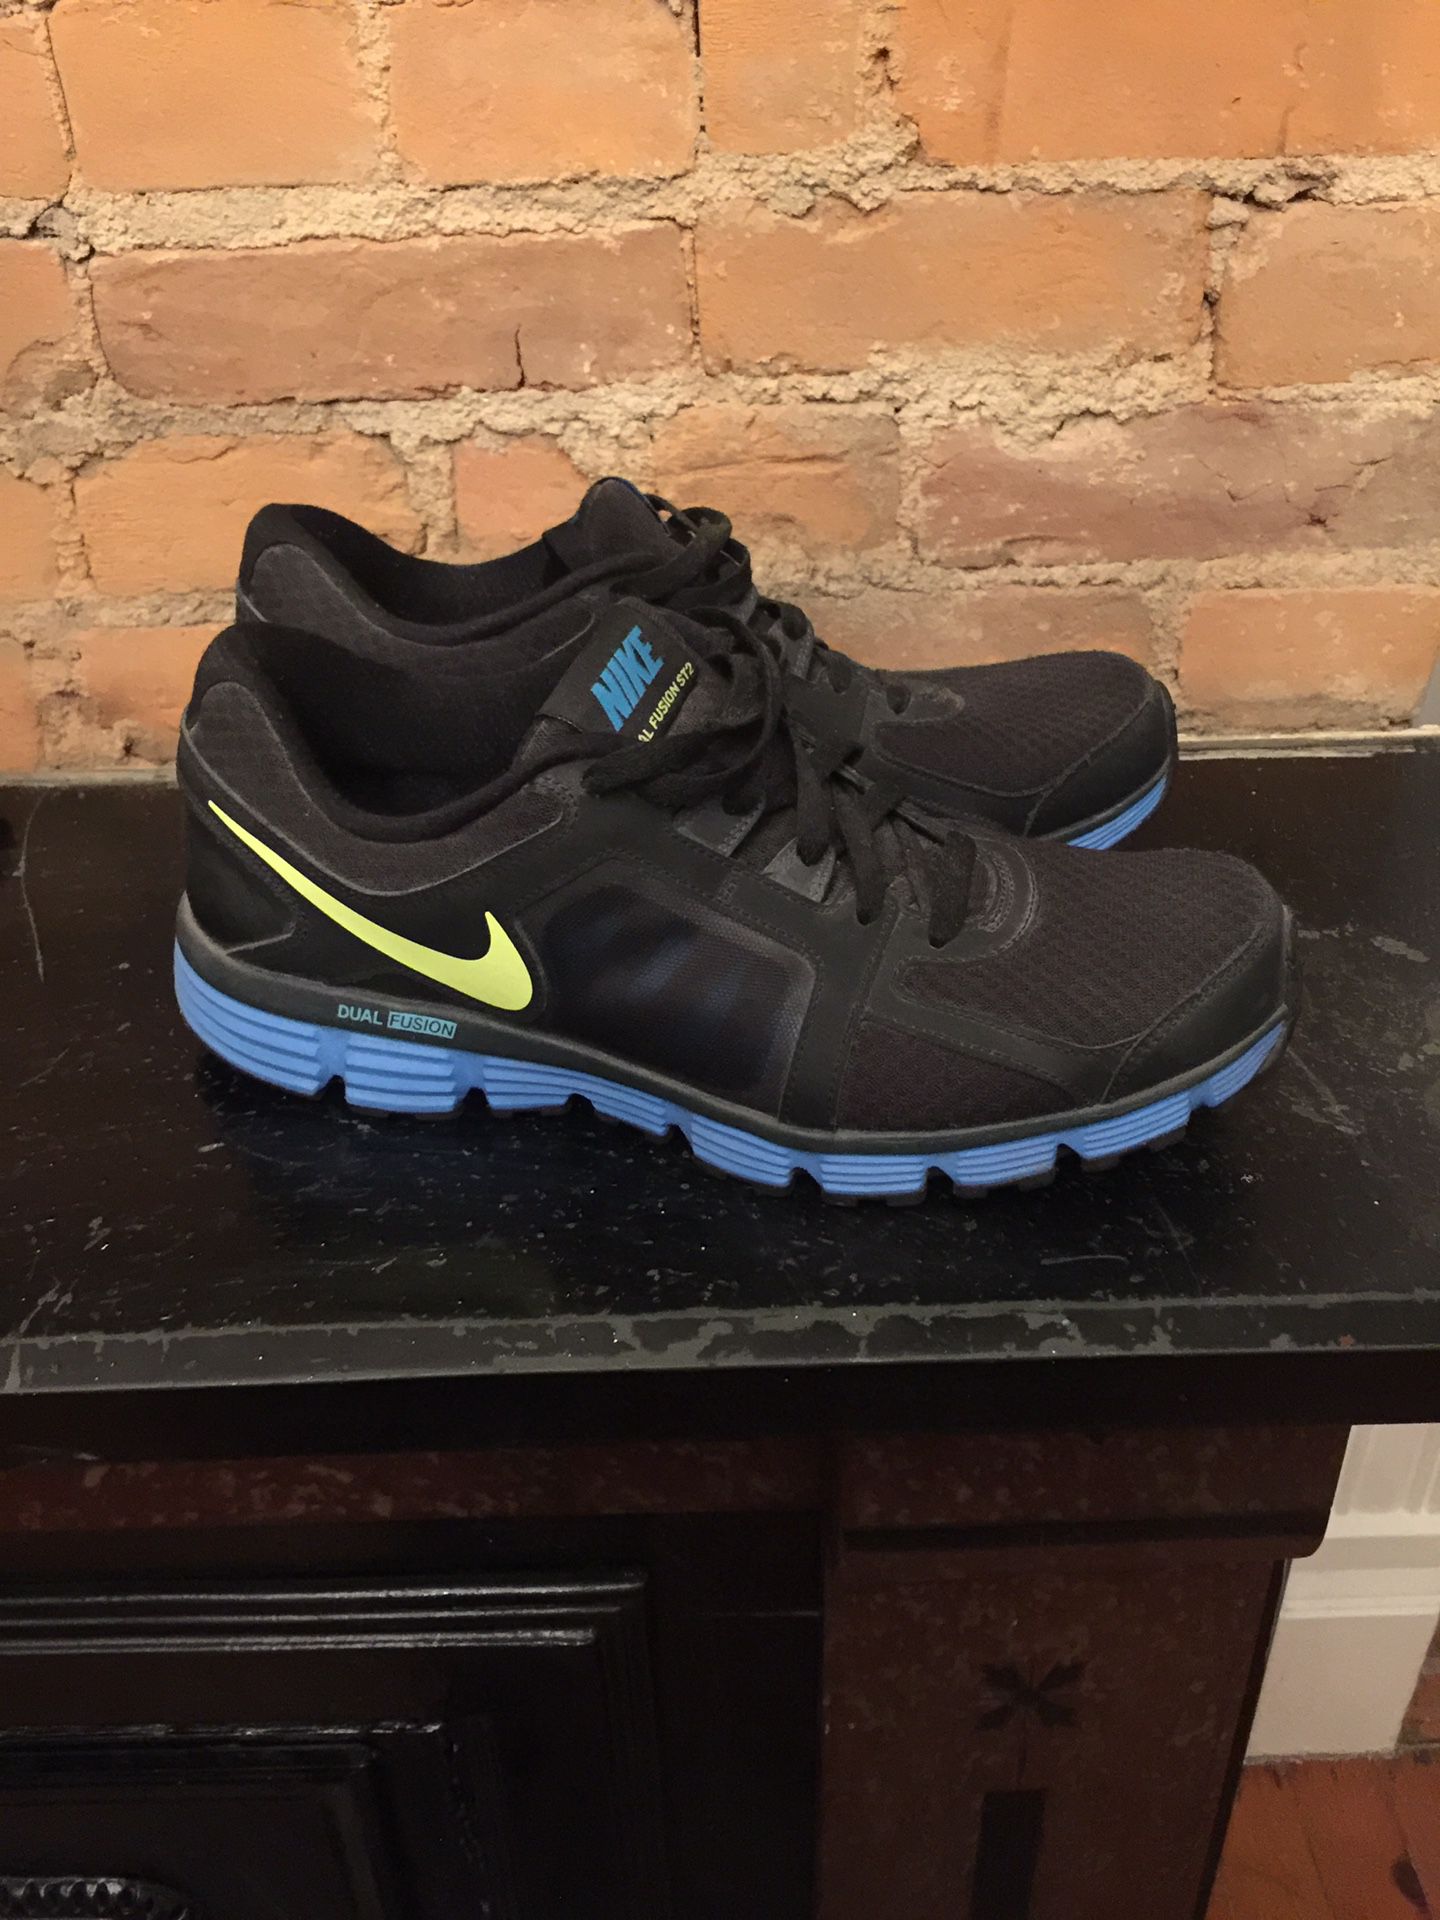 Nike Men’s Running Shoes - Size 11.5